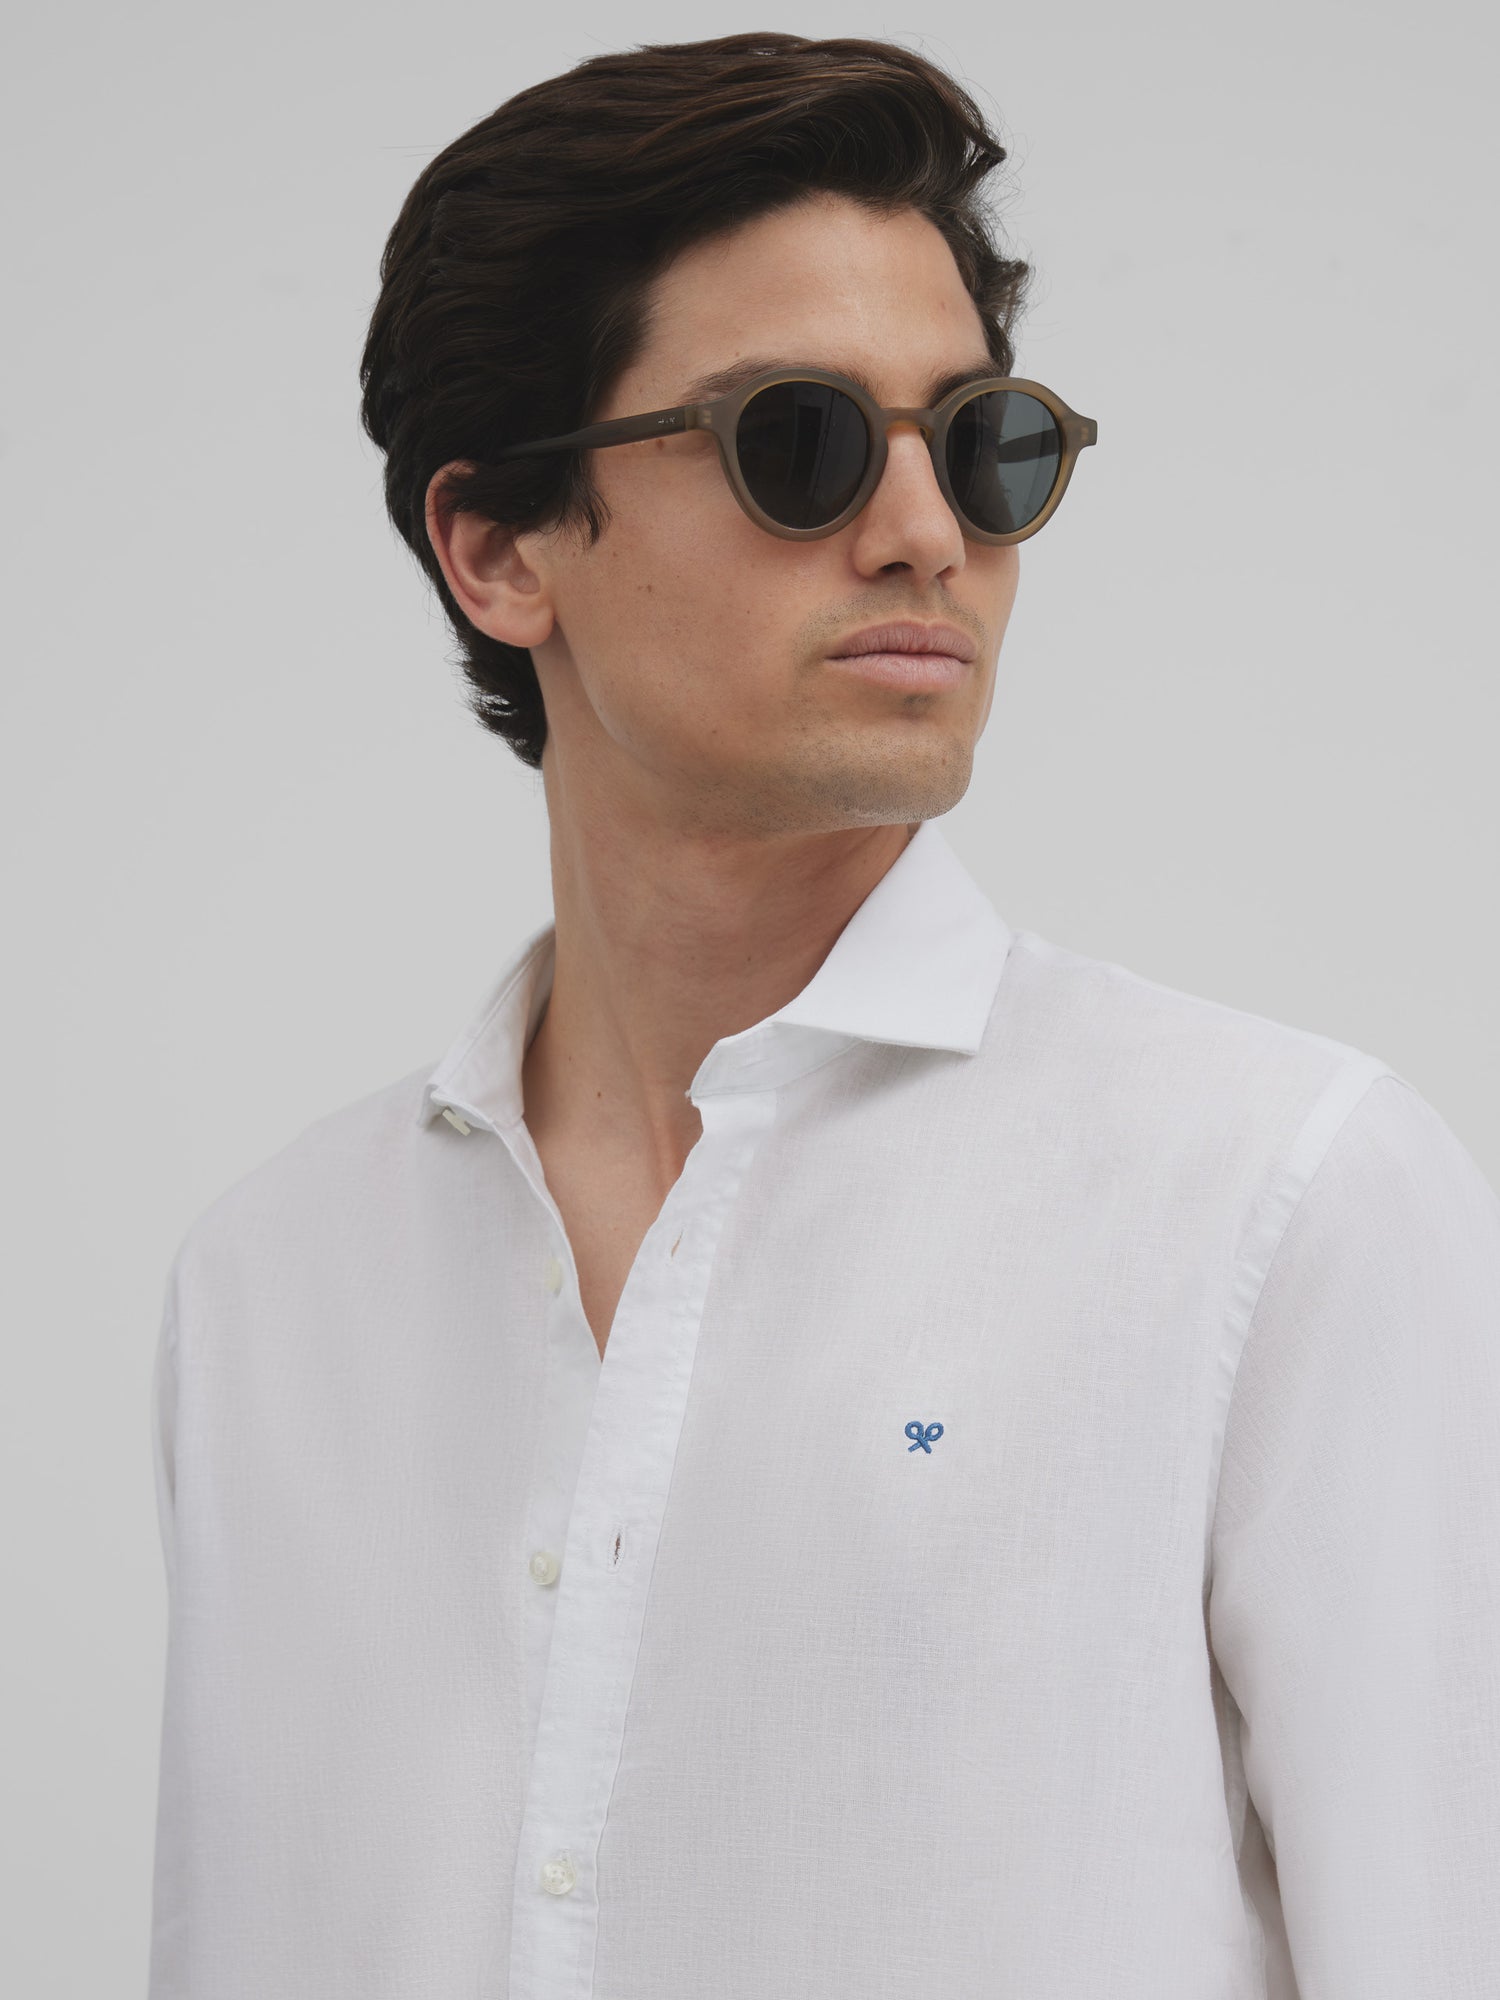 Camisa sport silbon soft blanca